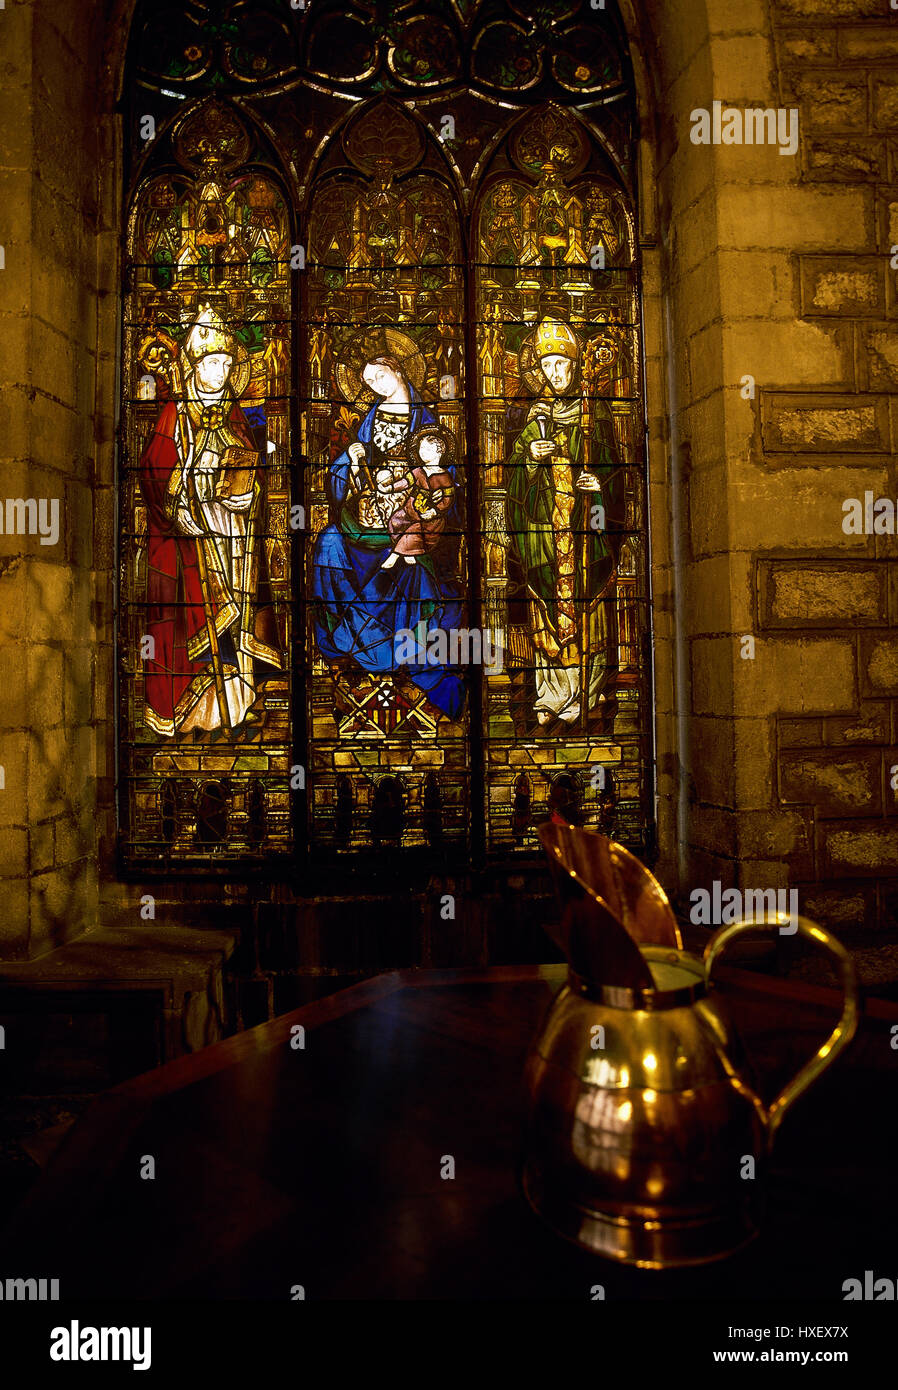 Antonio Rigalt (1861-1914). Modernist artist. Stained glass of town hall.  Virgin Mary with Bishops of Barcelona Saint Olegarius Bonestruga (1060-1137) and Saint Severus of Barcelona (d. 304). Catalonia, Spain. Stock Photo